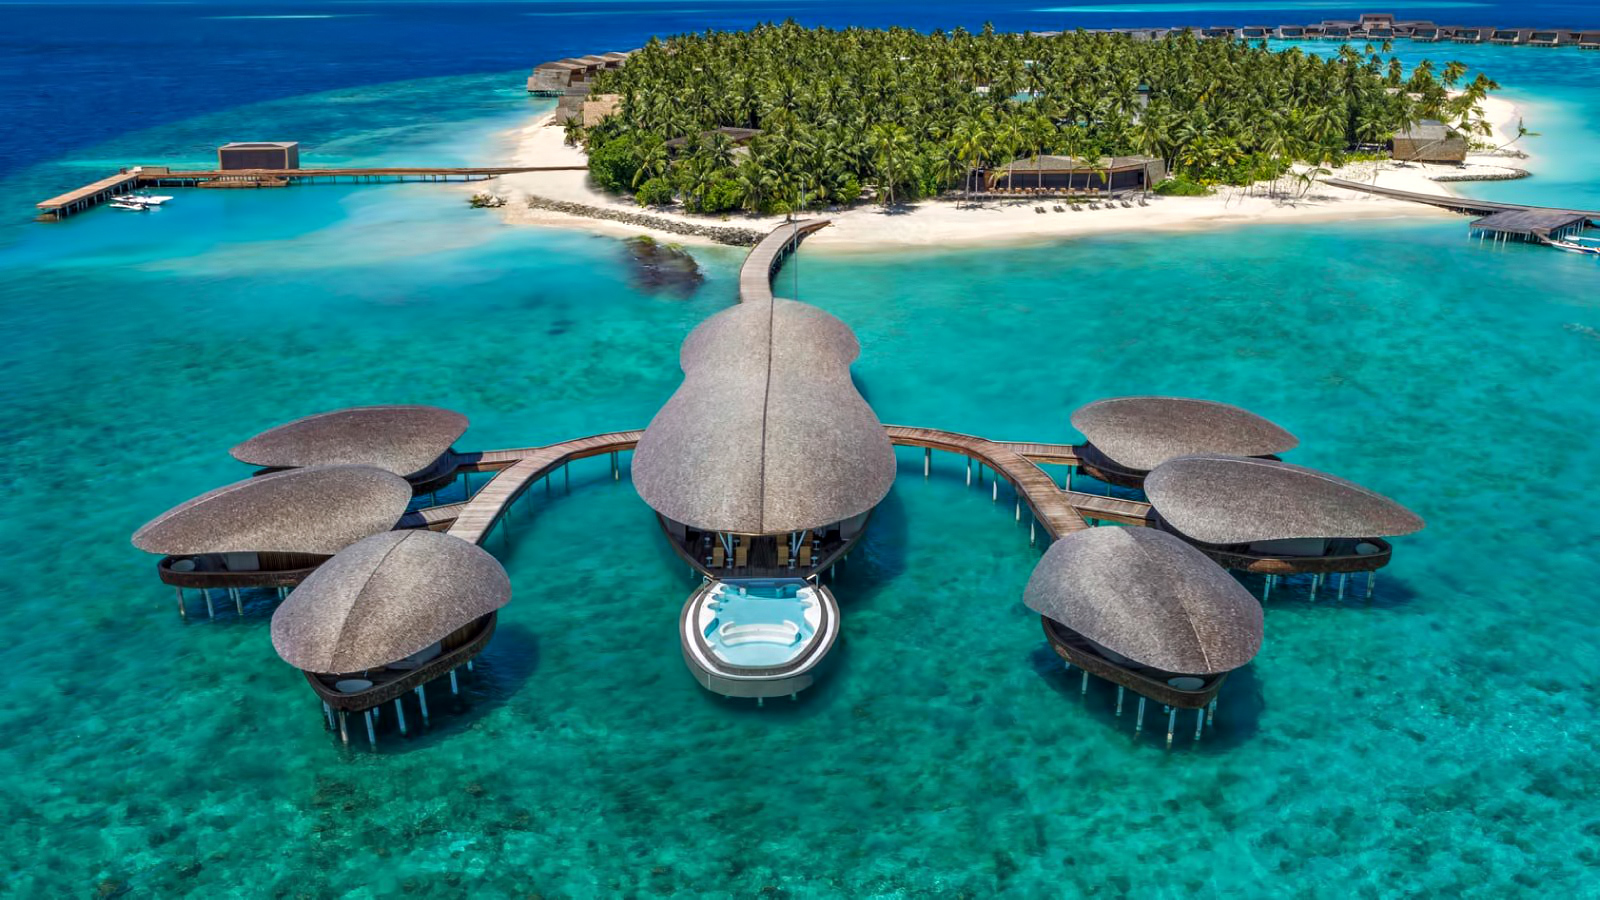 The St. Regis Maldives Vommuli Resort – Dhaalu Atoll, Maldives – Vommuli Island